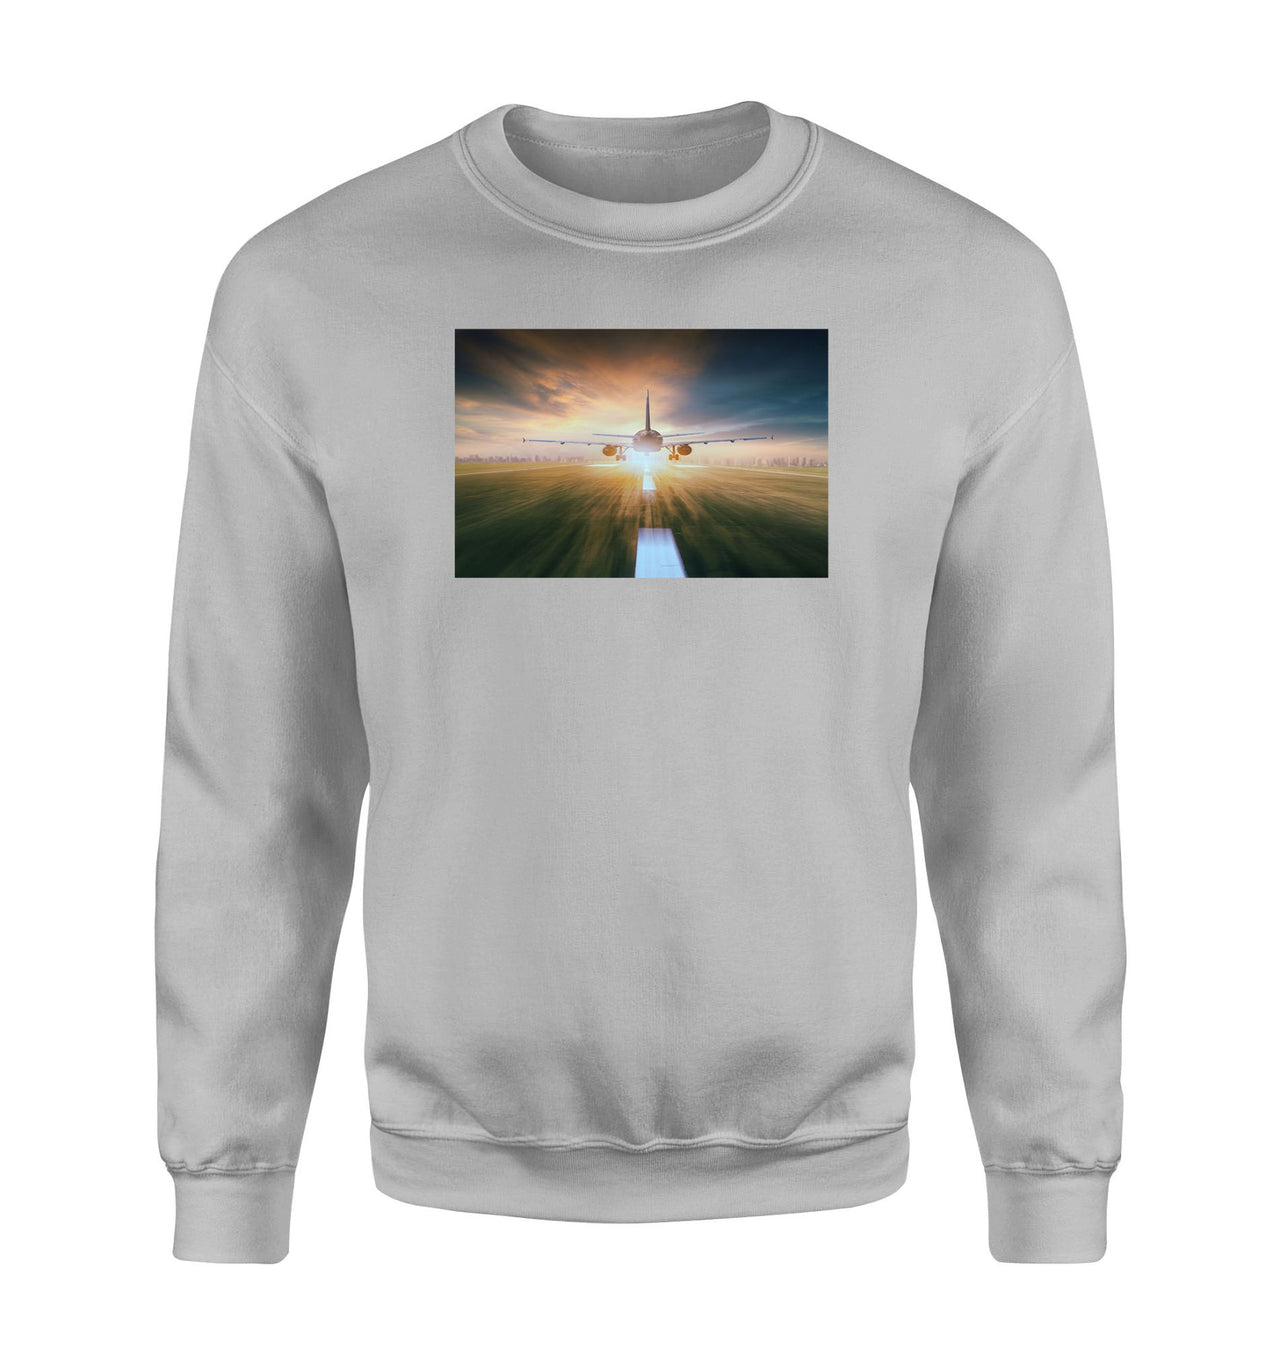 Airplane Flying Over Runway Designed Sweatshirts